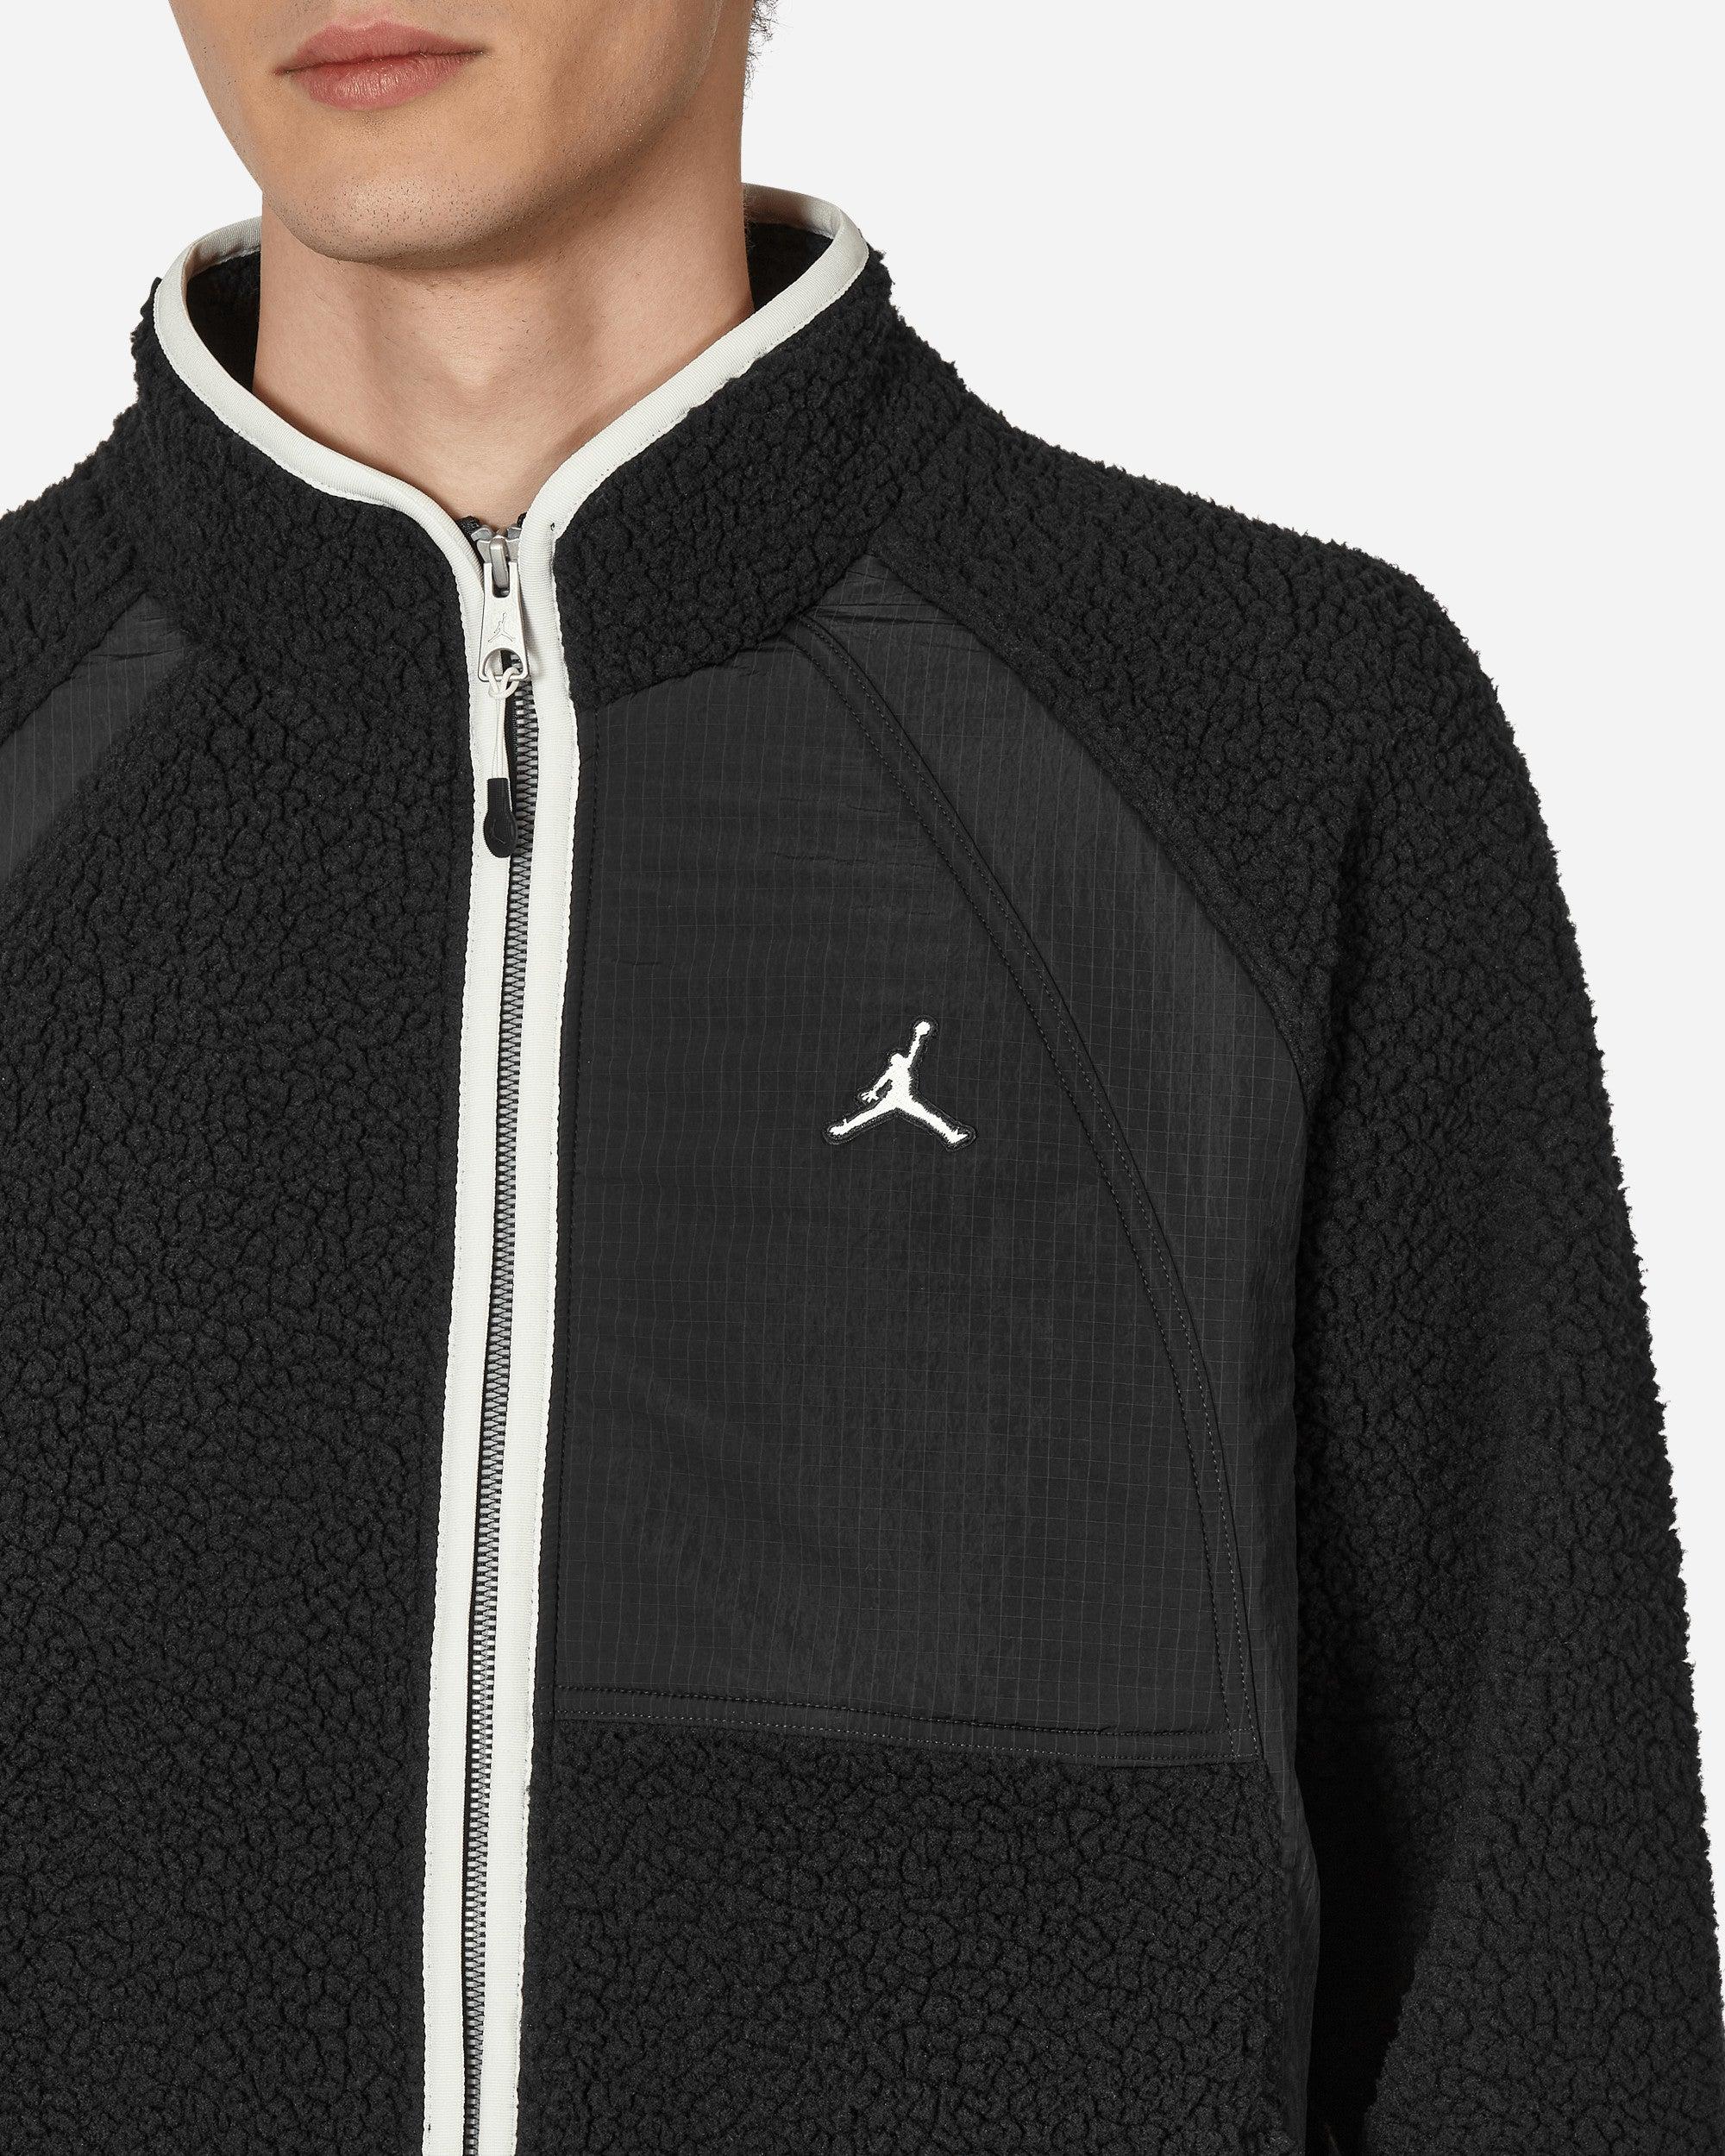 Men's Miami Heat Nike Black City Edition Courtside Full-Zip Bomber Jacket